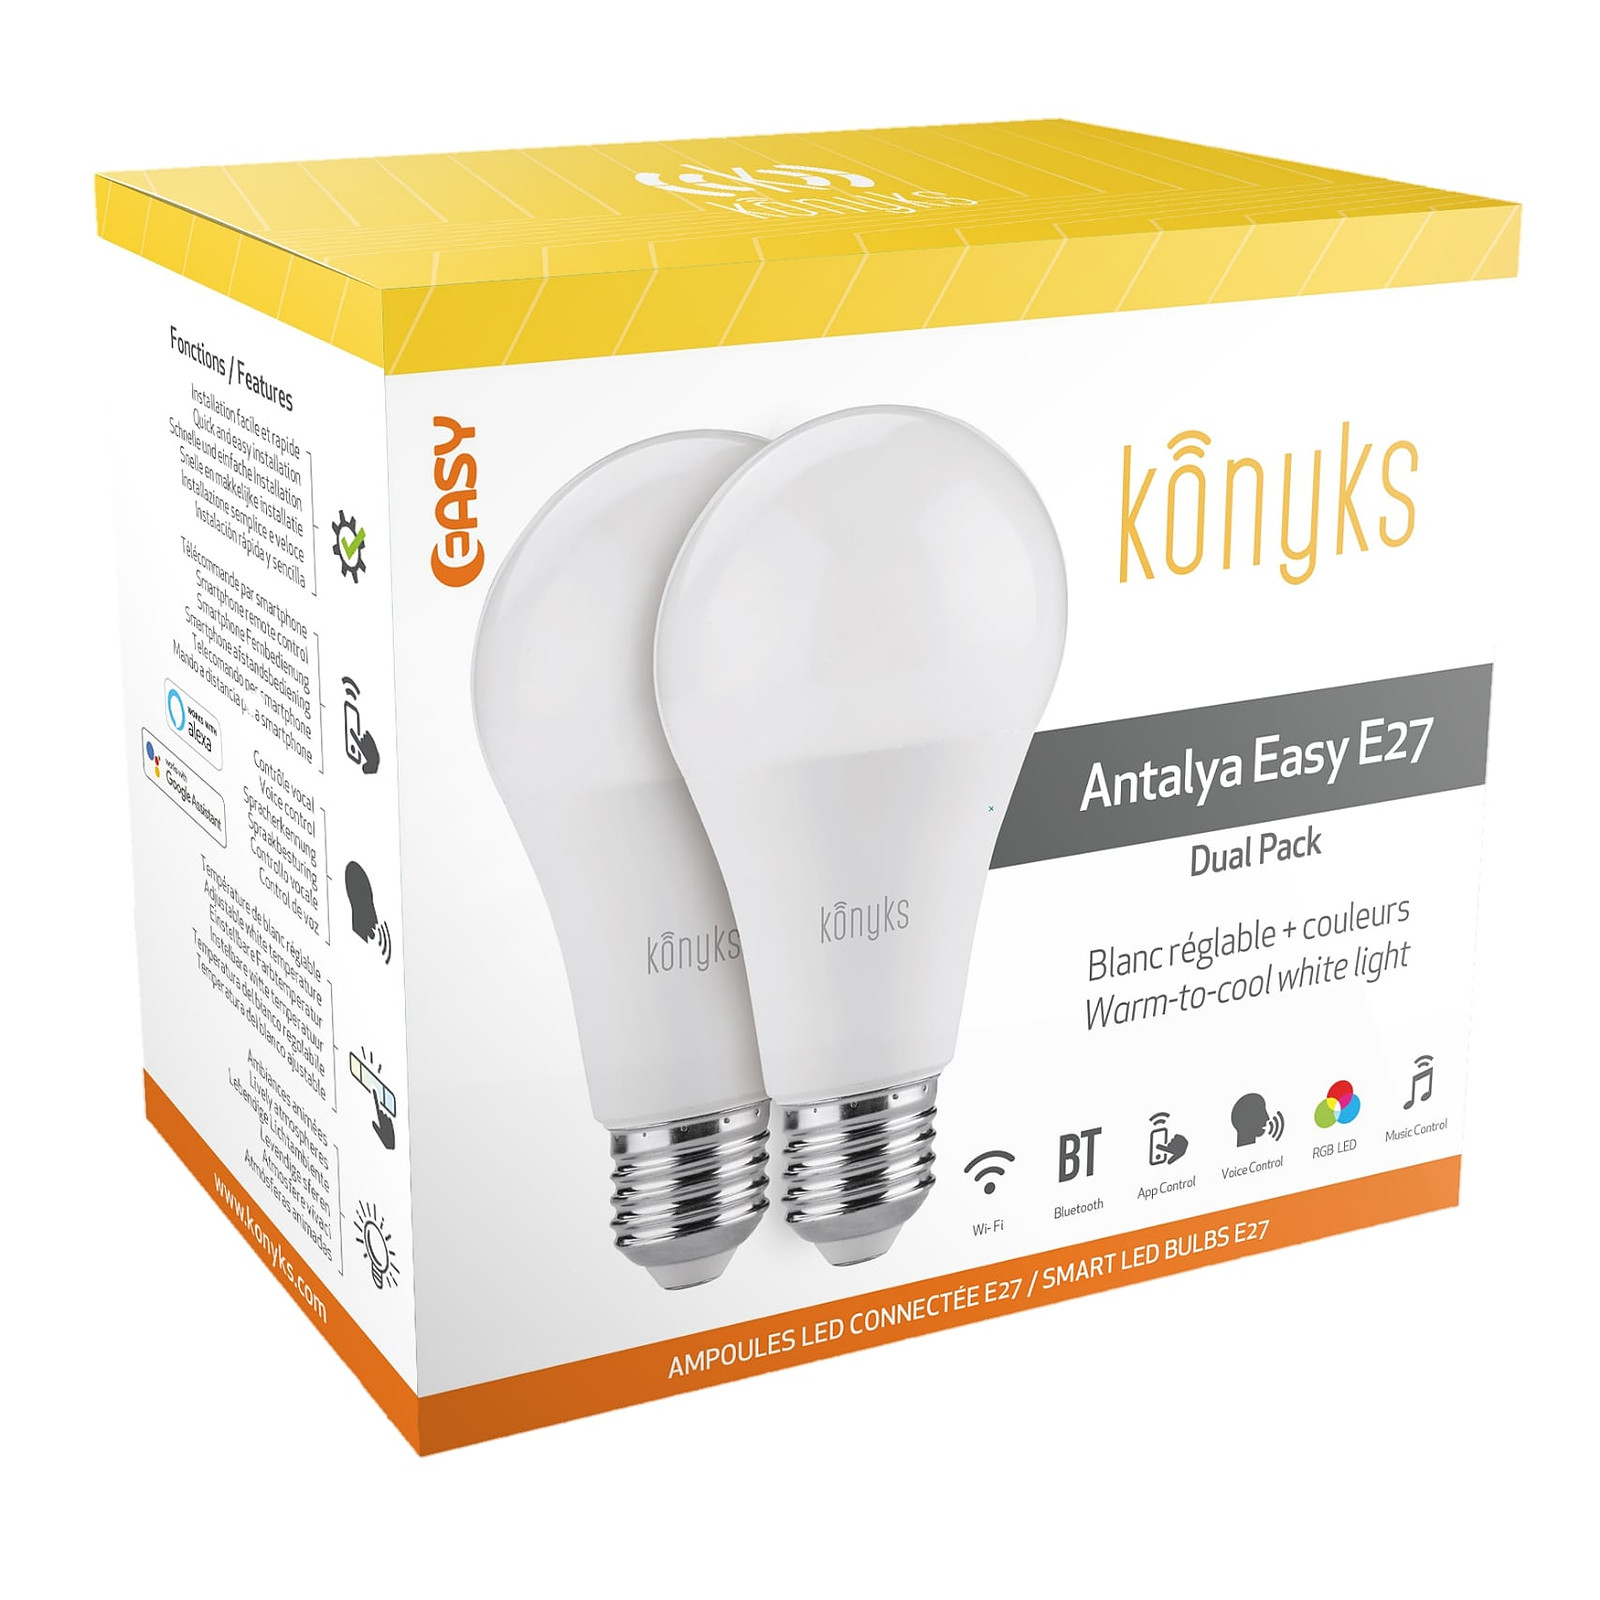 Konyks Antalya Easy E27 Dual Pack - Ampoule connectee Konyks